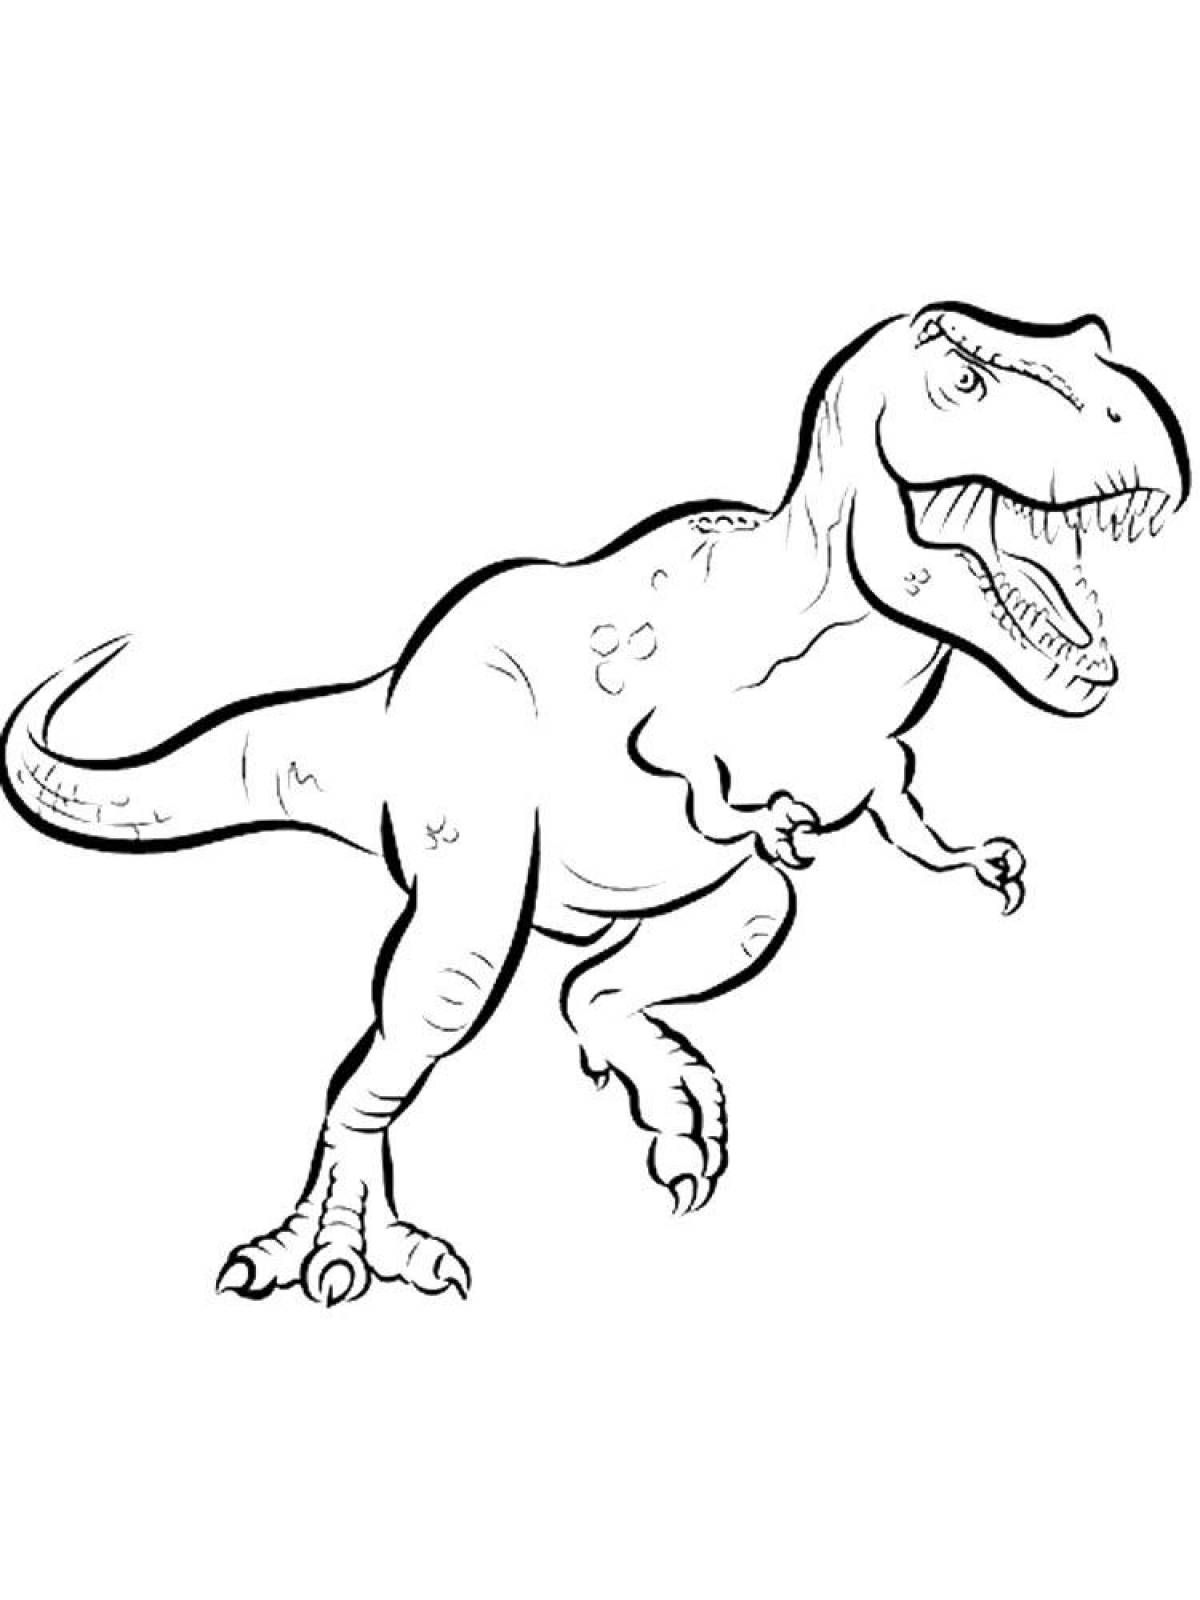 Huge dinosaur rex coloring page